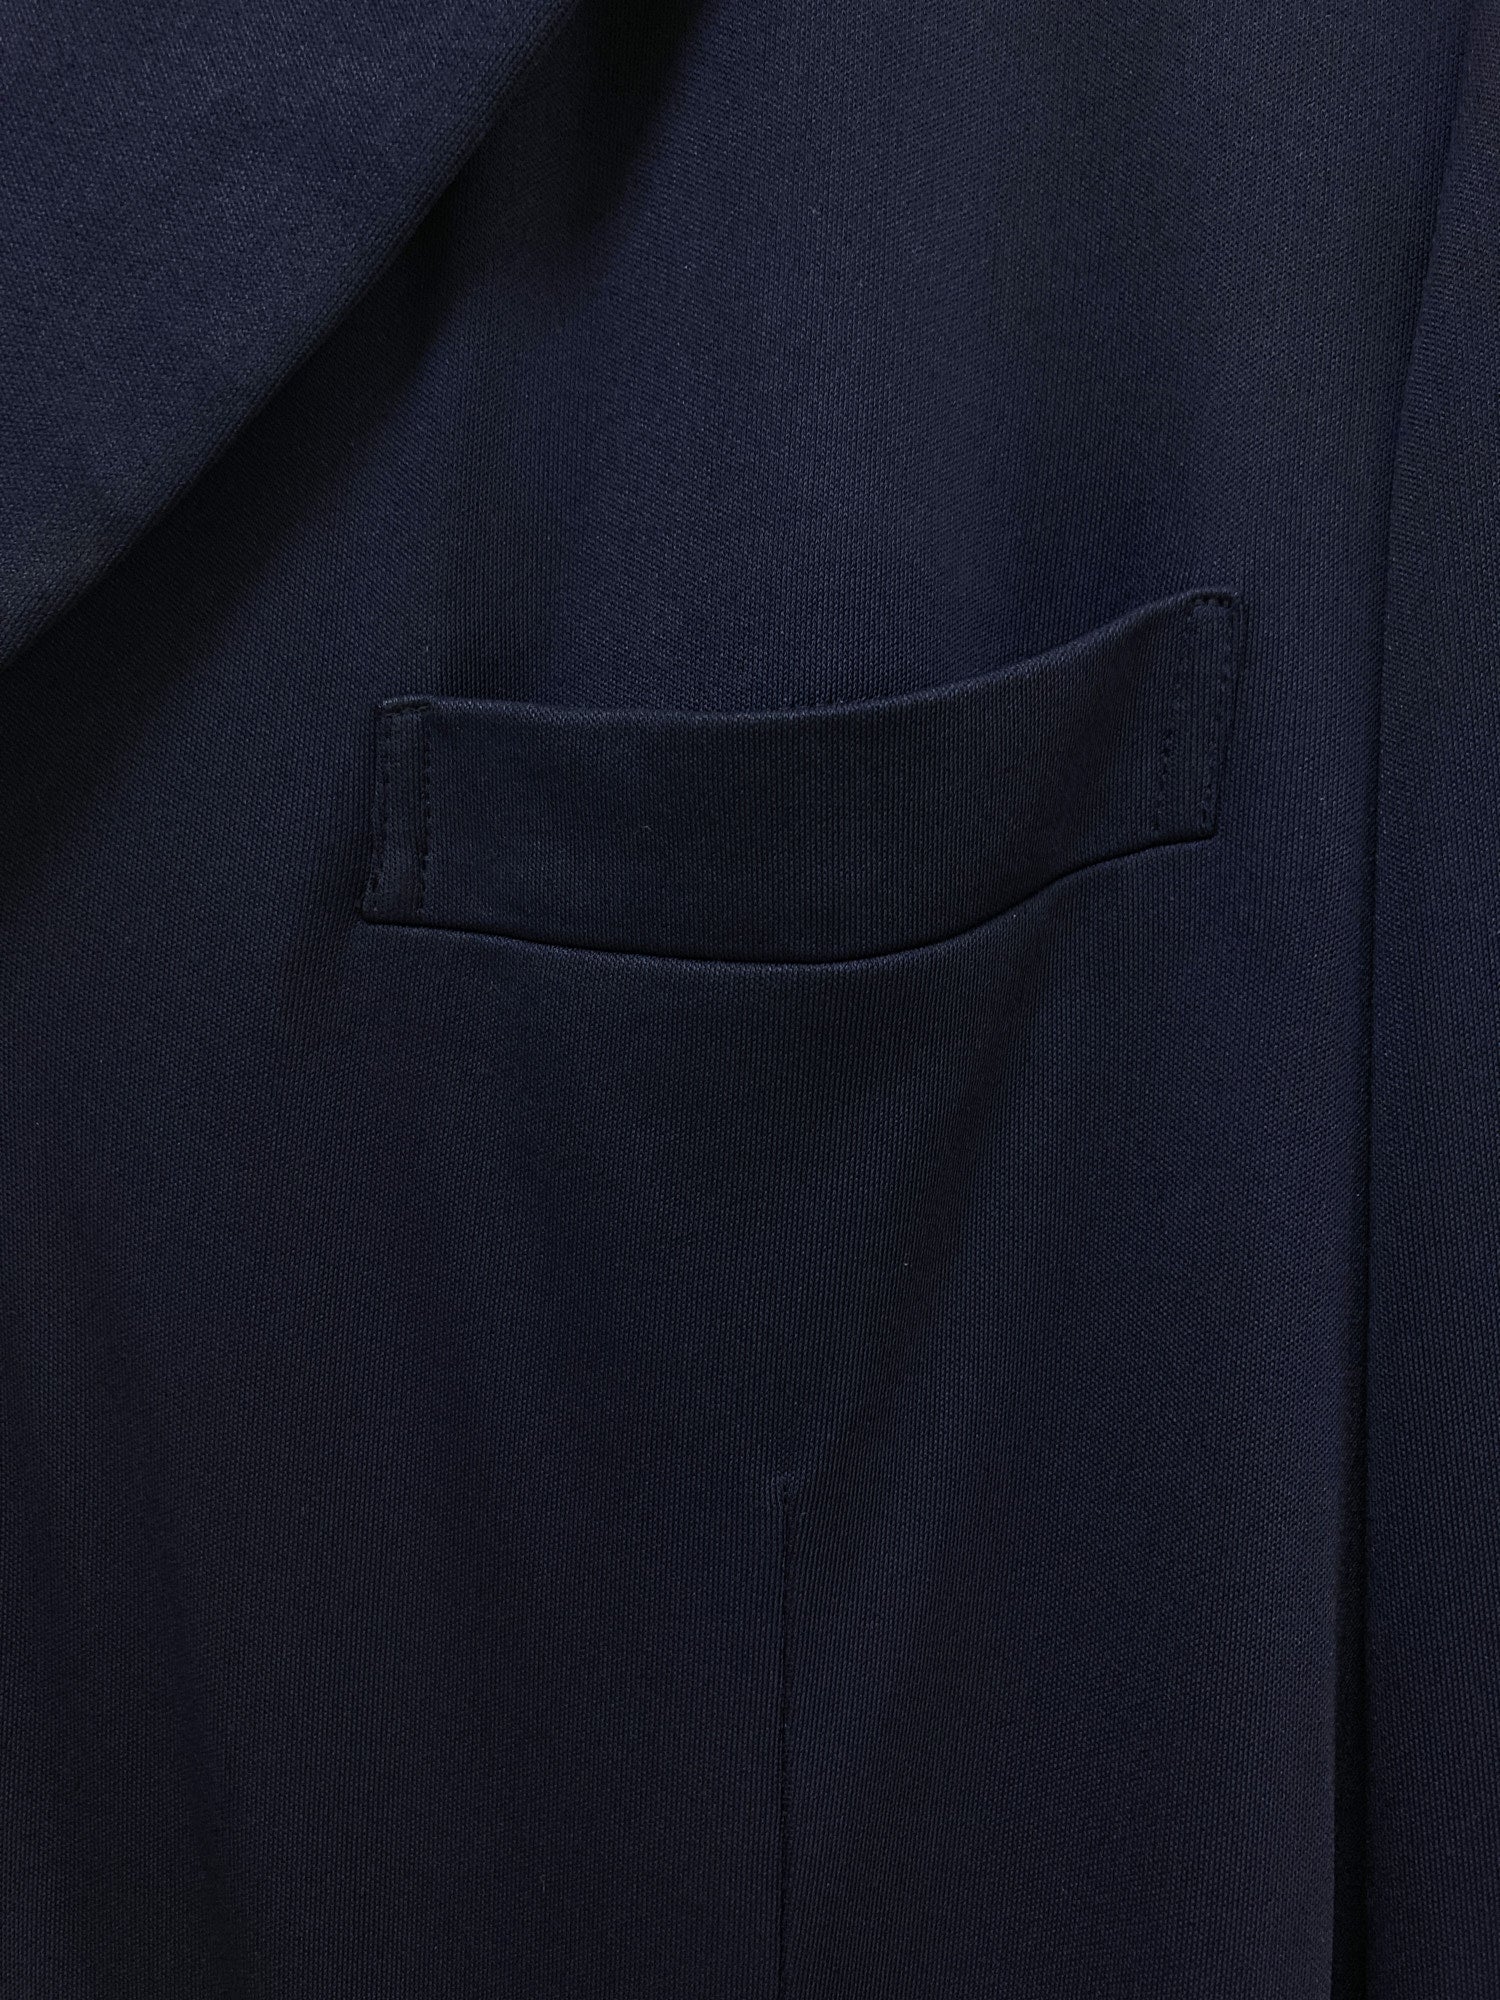 Robe de Chambre Comme des Garcons 1992 dark navy three button knit coat